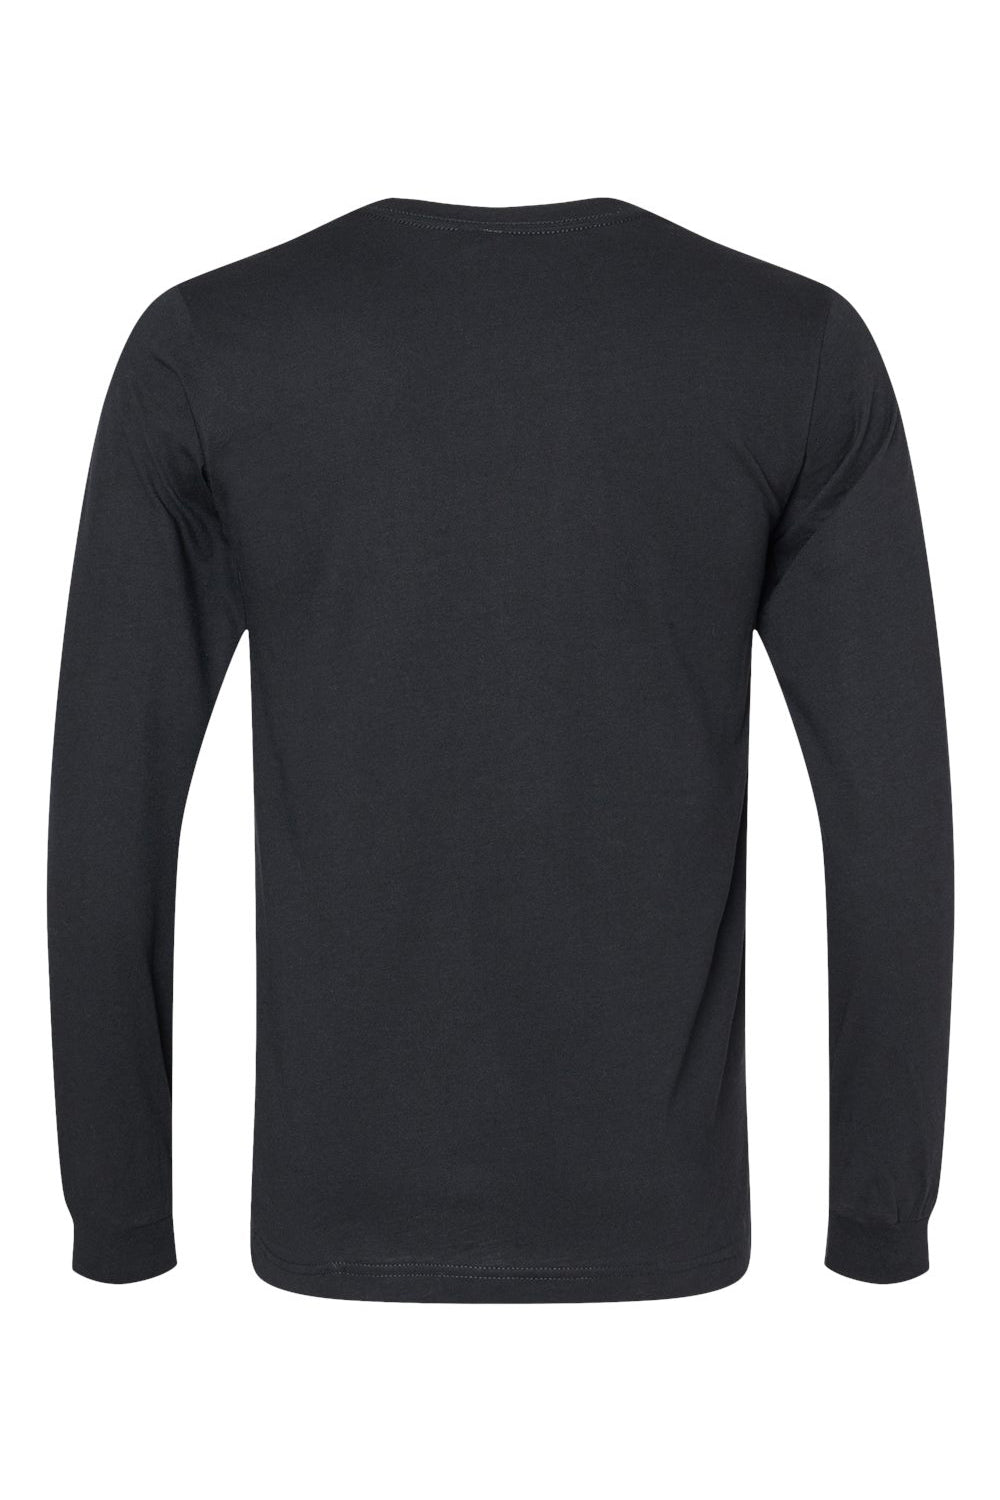 Bella + Canvas BC3501CVC Mens CVC Long Sleeve Crewneck T-Shirt Solid Black Flat Back